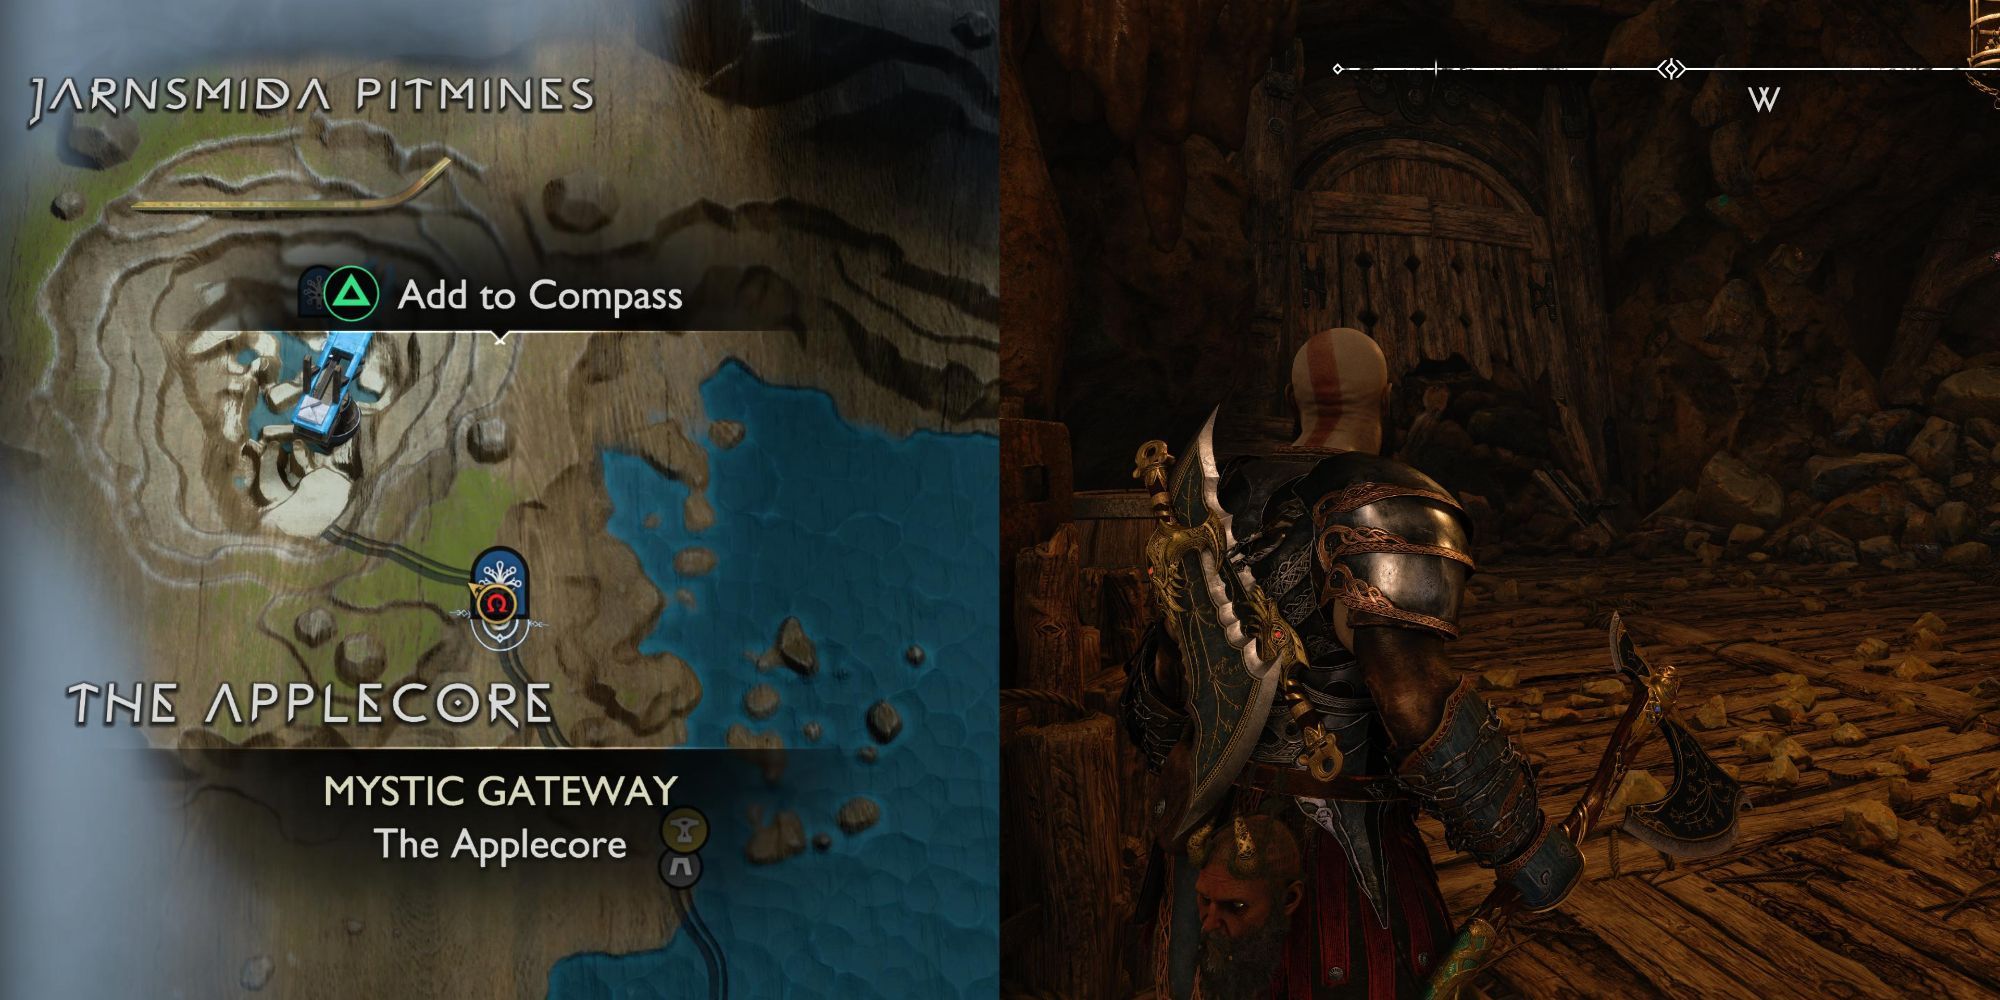 Kratos stands in front of the Svartalfheim Applecore Yggdrasil Rift location, near the Mystic Gateway